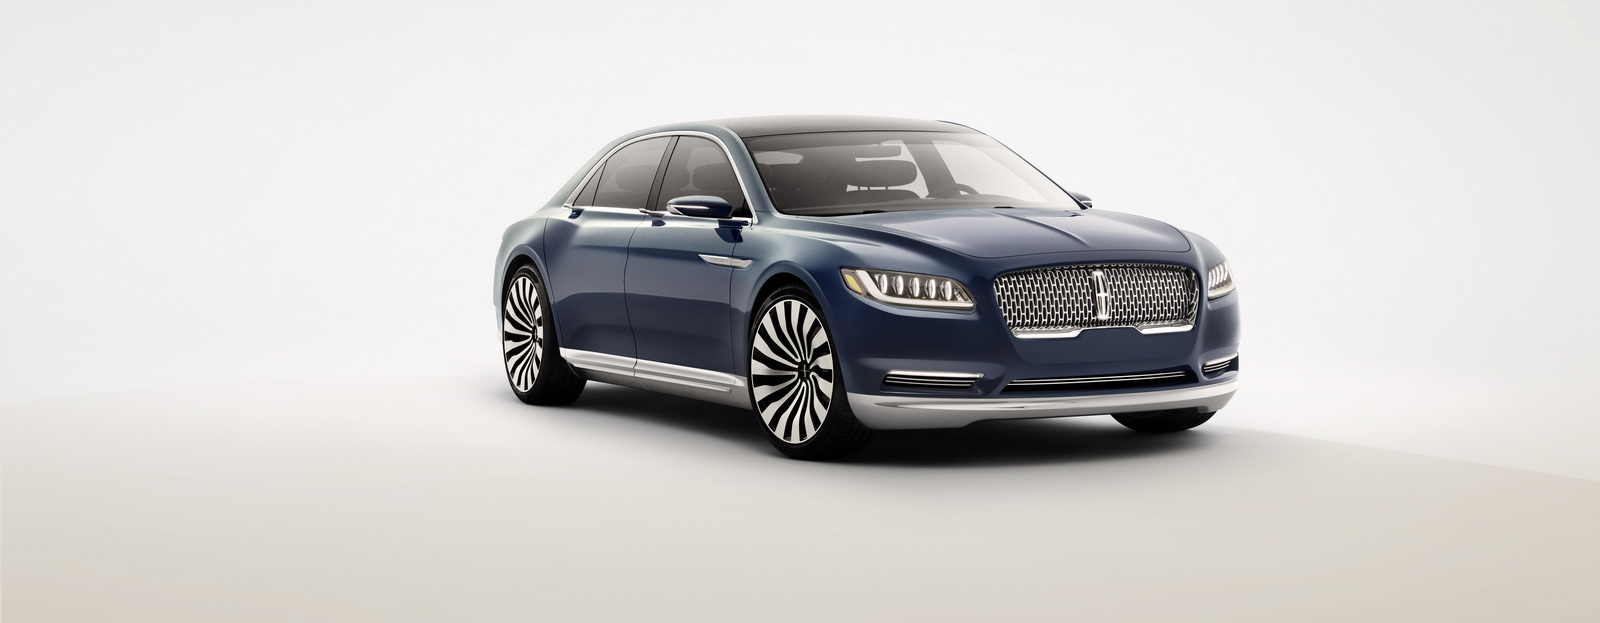 Lincoln-Continental-Concept-4